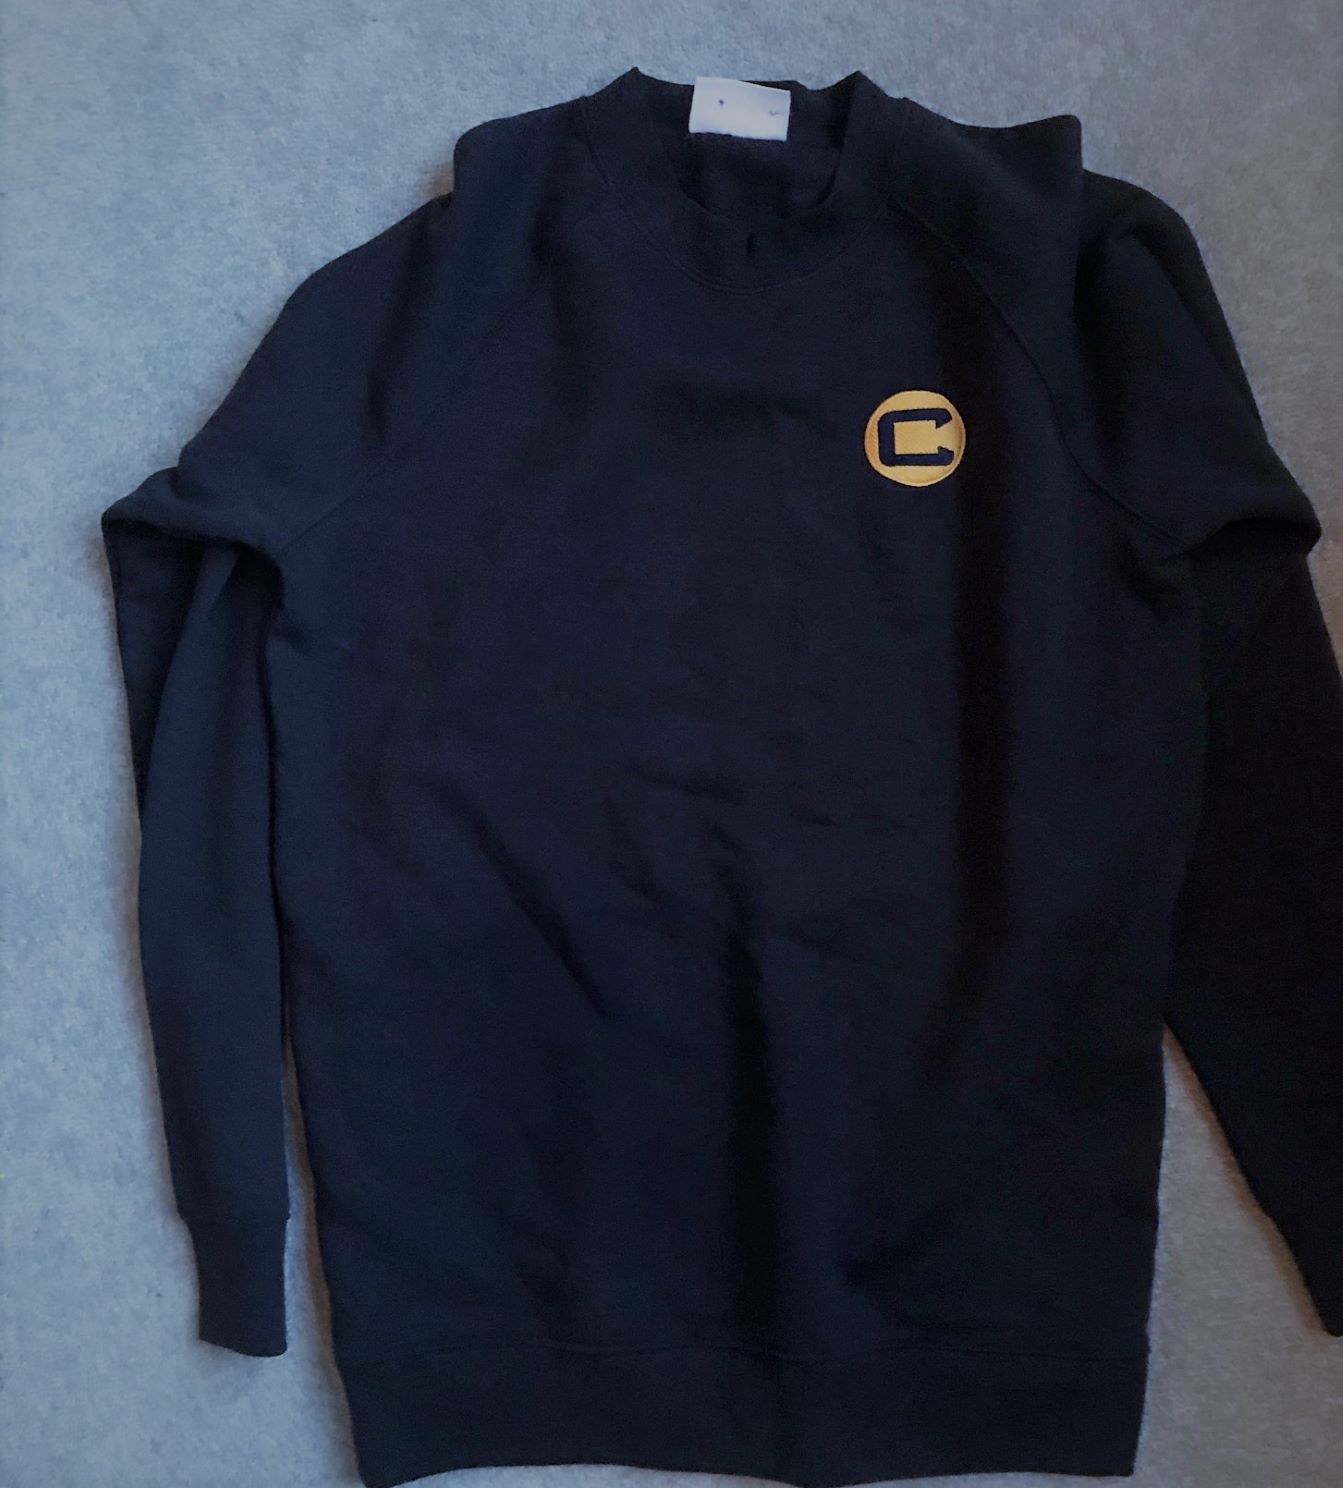 Charter North PE Jumper/ Sweatshirt size 13